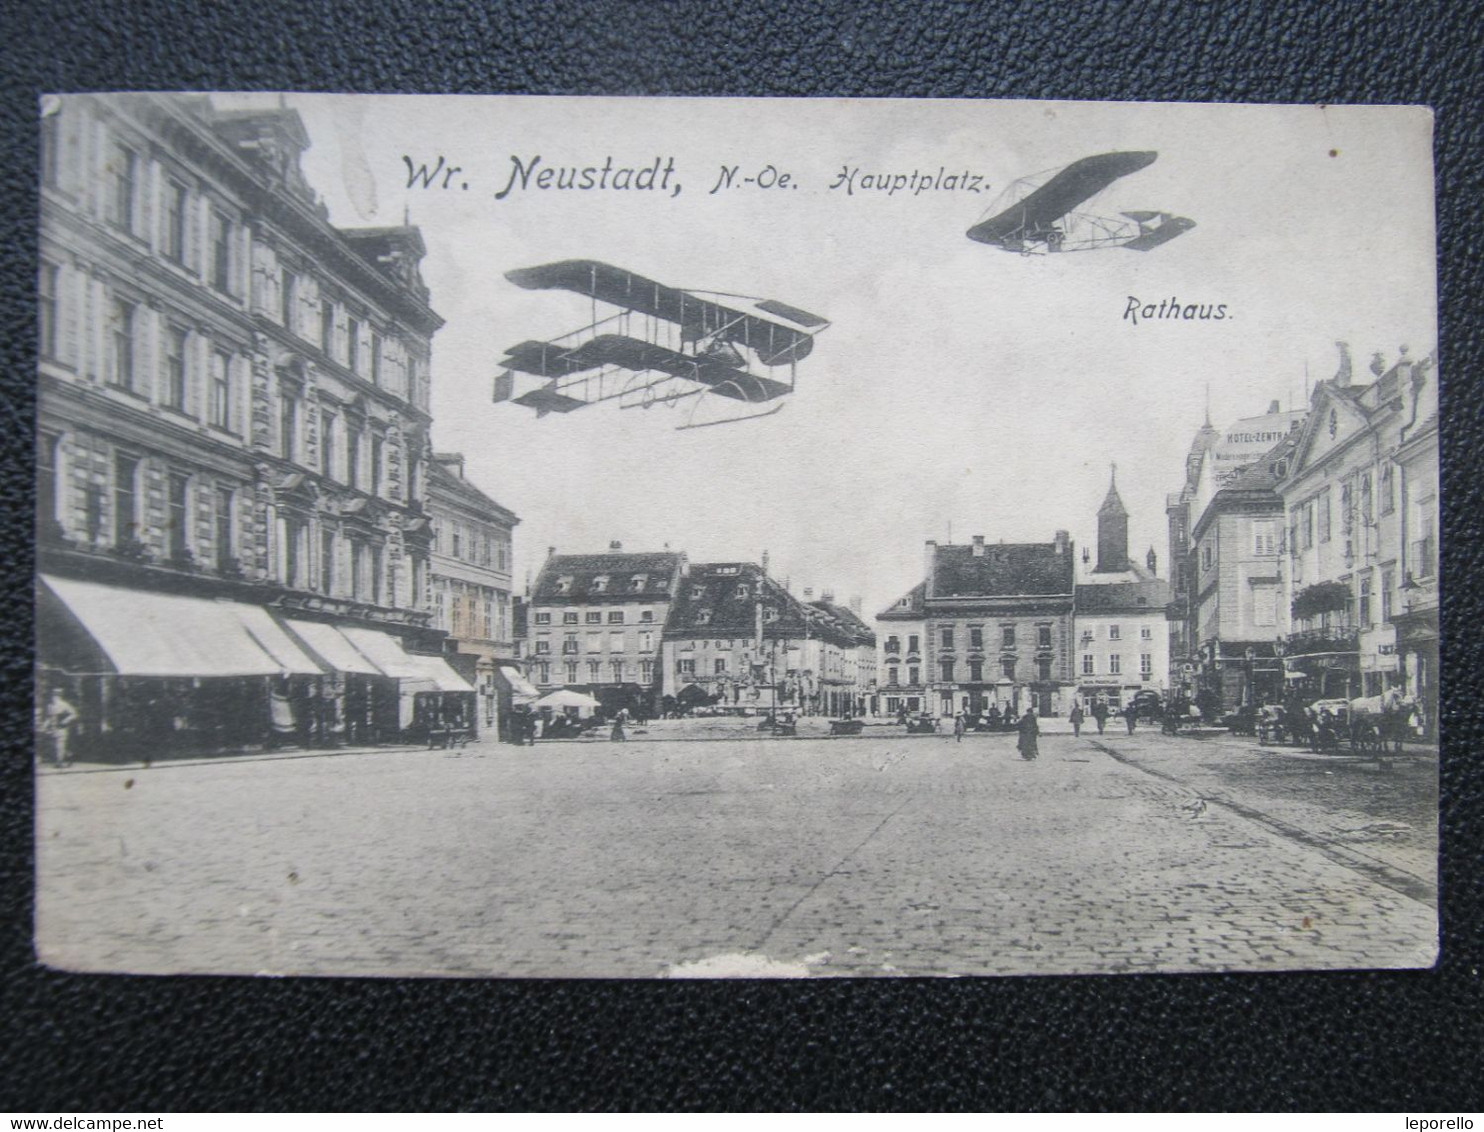 AK WIENER NEUSTADT Flugzeug 1917 /// D*54807 - Wiener Neustadt